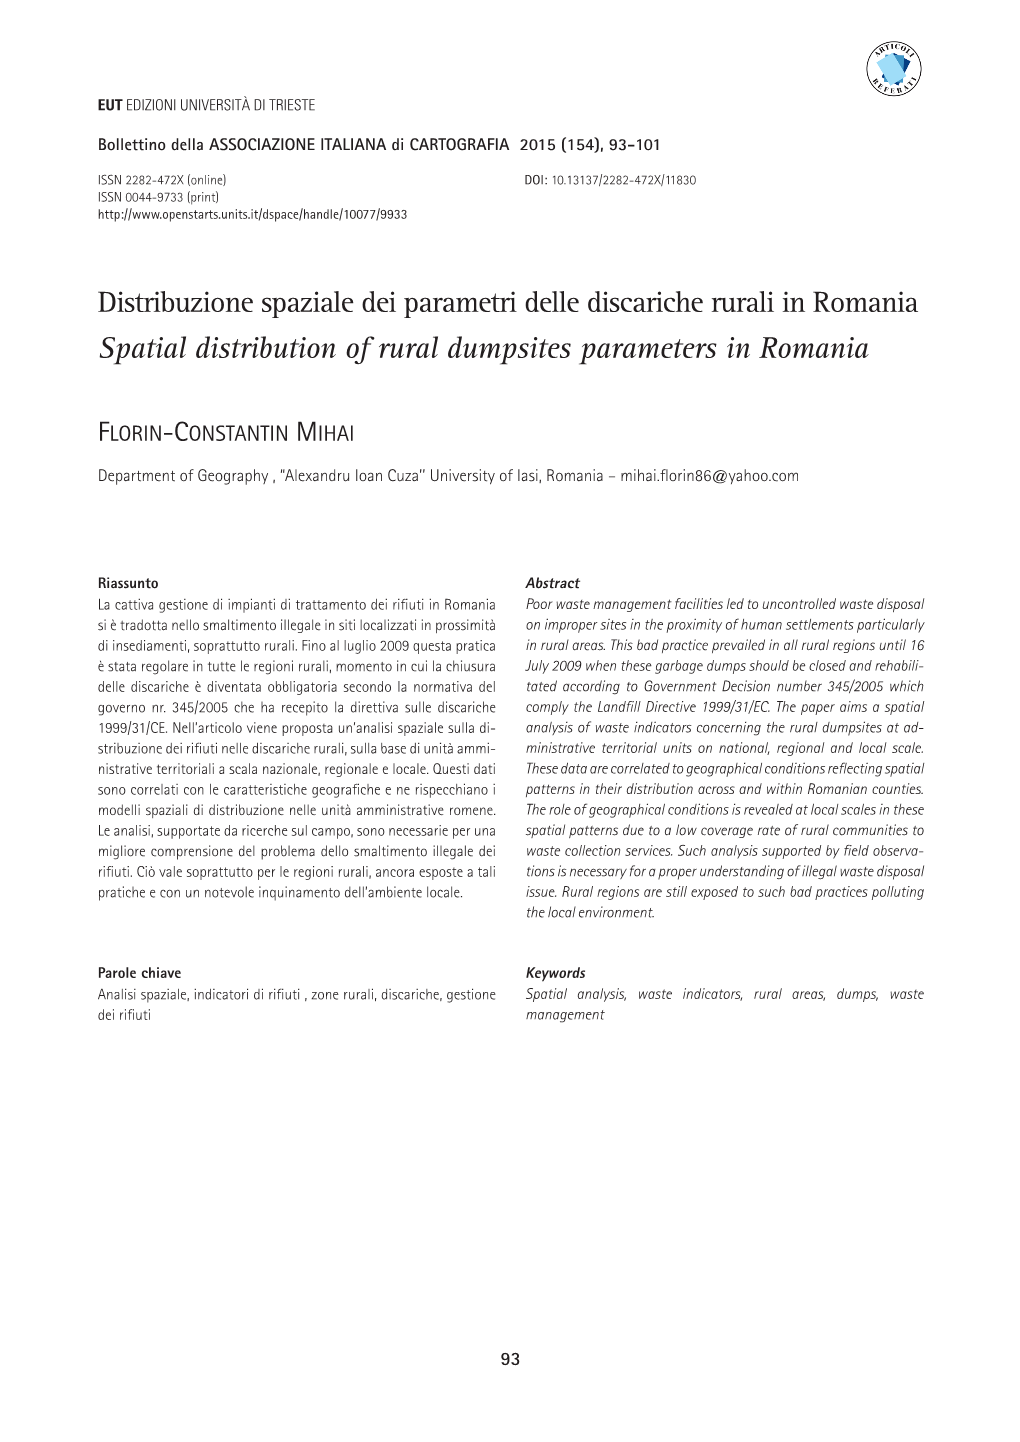 Spatial Distribution of Rural Dumpsites Parameters in Romania